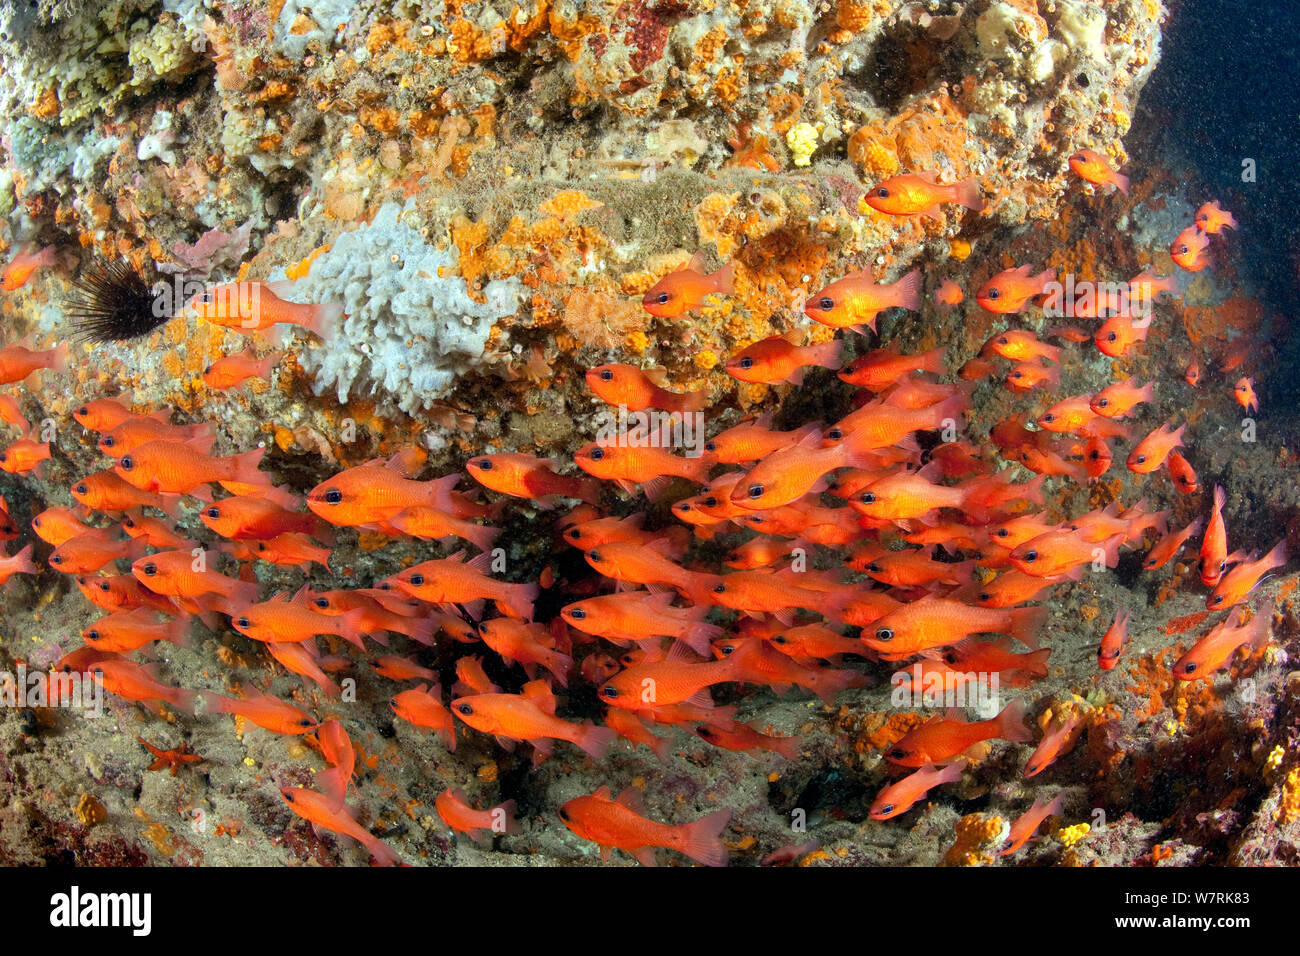 Secca di pesci cardinale (Apogon imberbis) Isola d Ischia, Italia, Mar Tirreno, Mediterranea Foto Stock